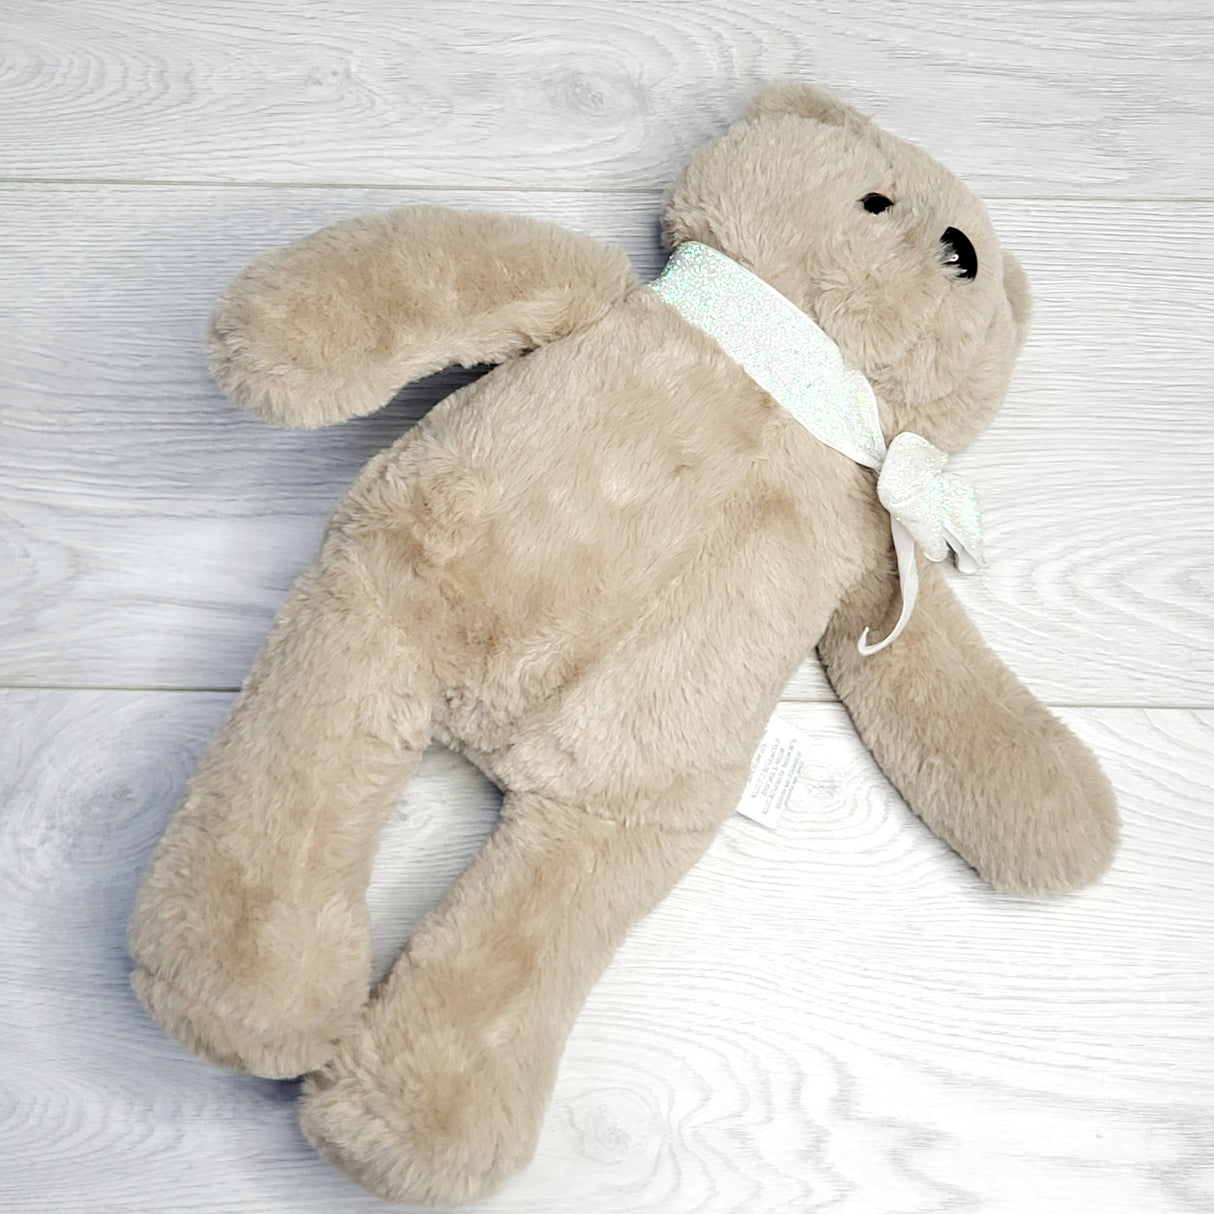 KTBL33 - Plush teddy bear